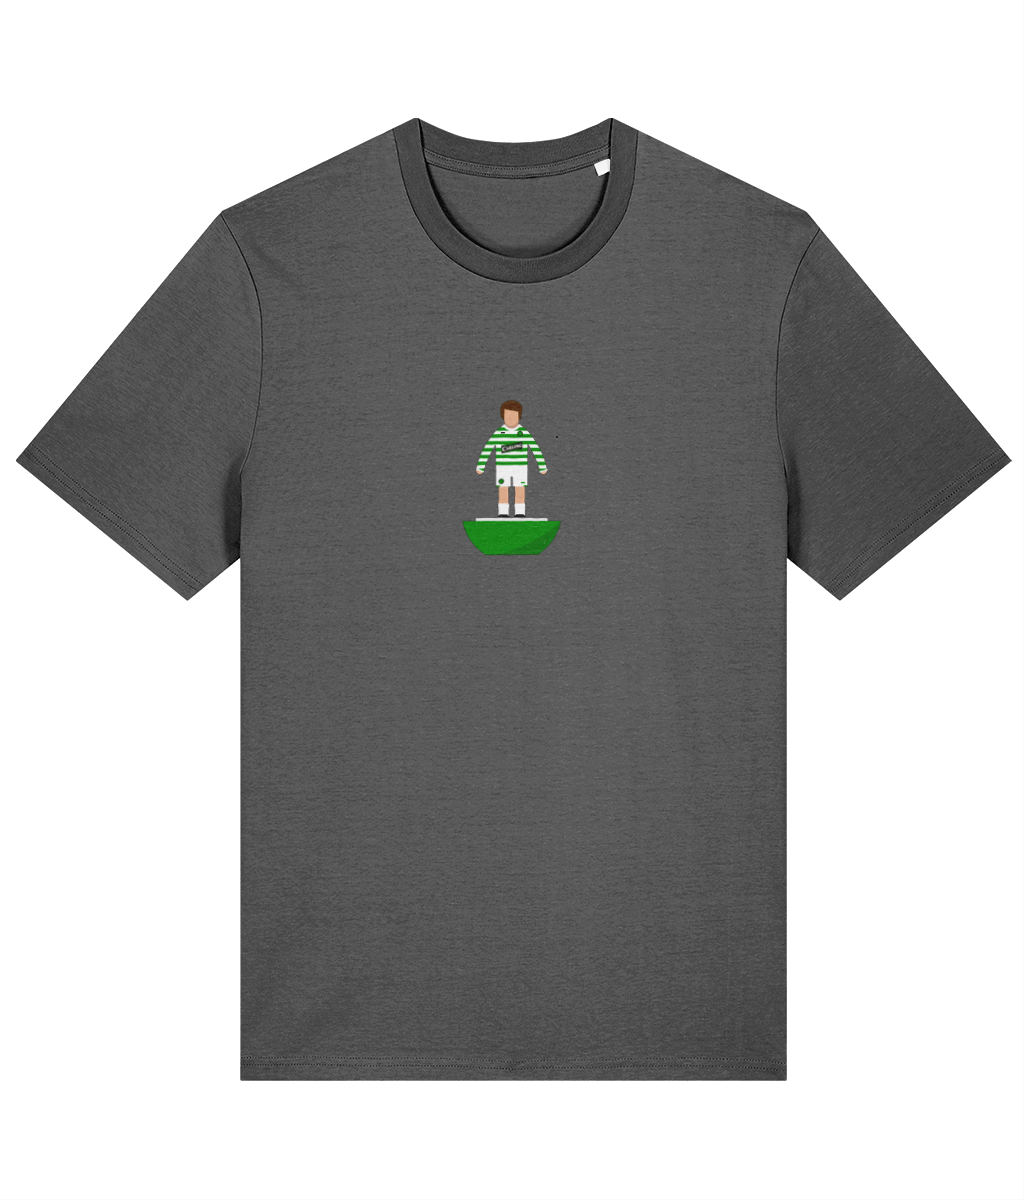 Football Kits 'Celtic 2007' Unisex T-Shirt